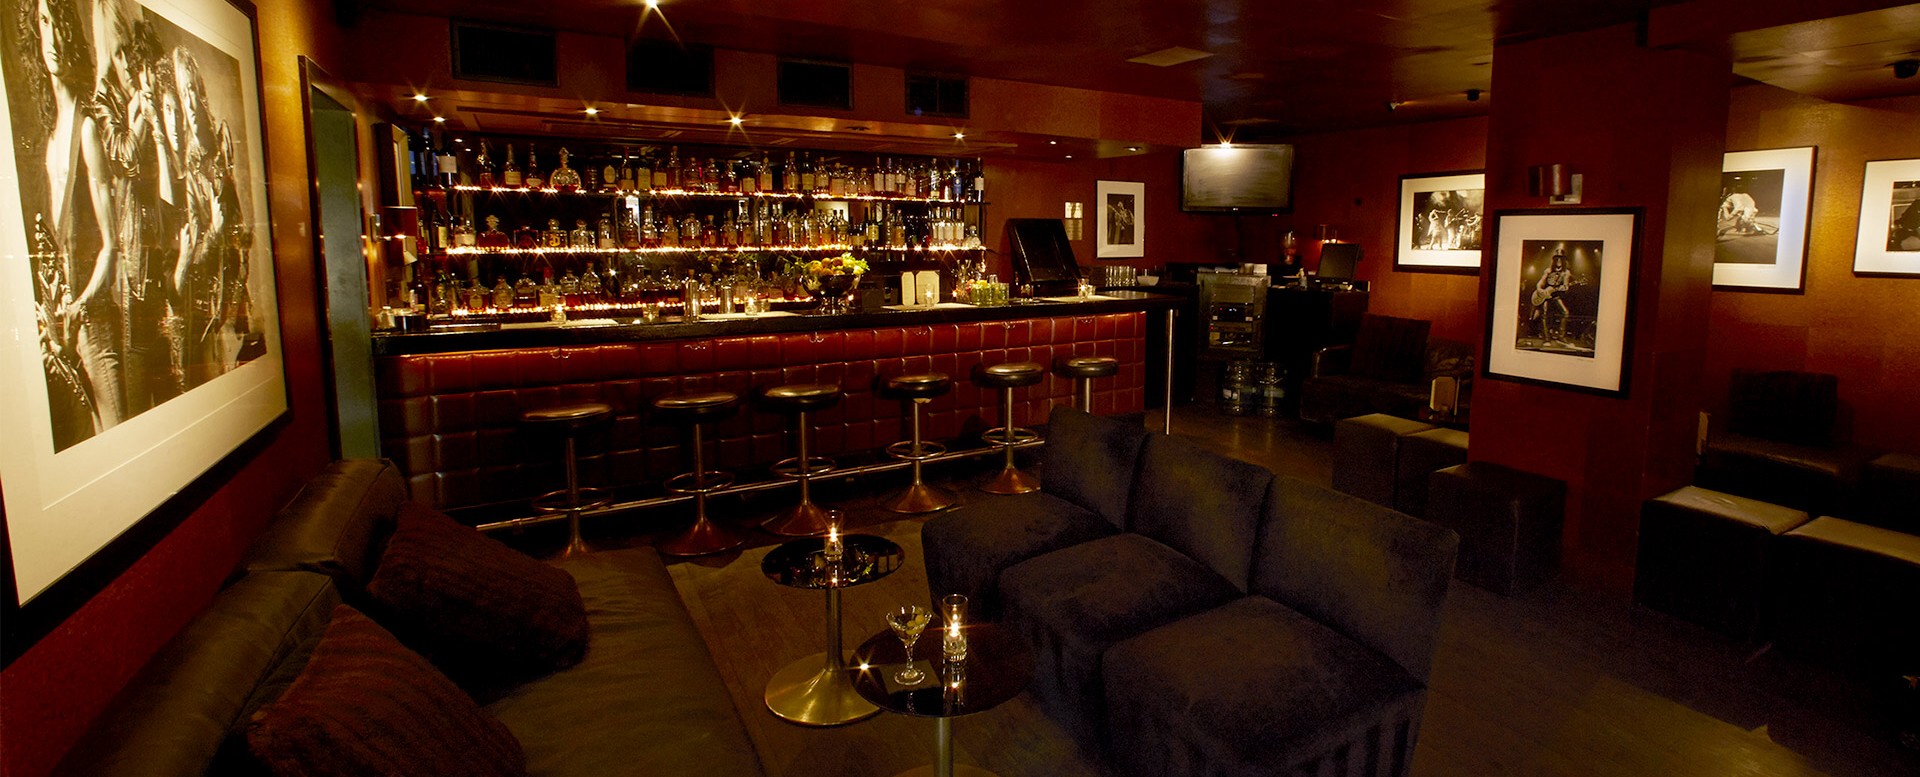 Sunset Marquis Hotel - Bar 1200